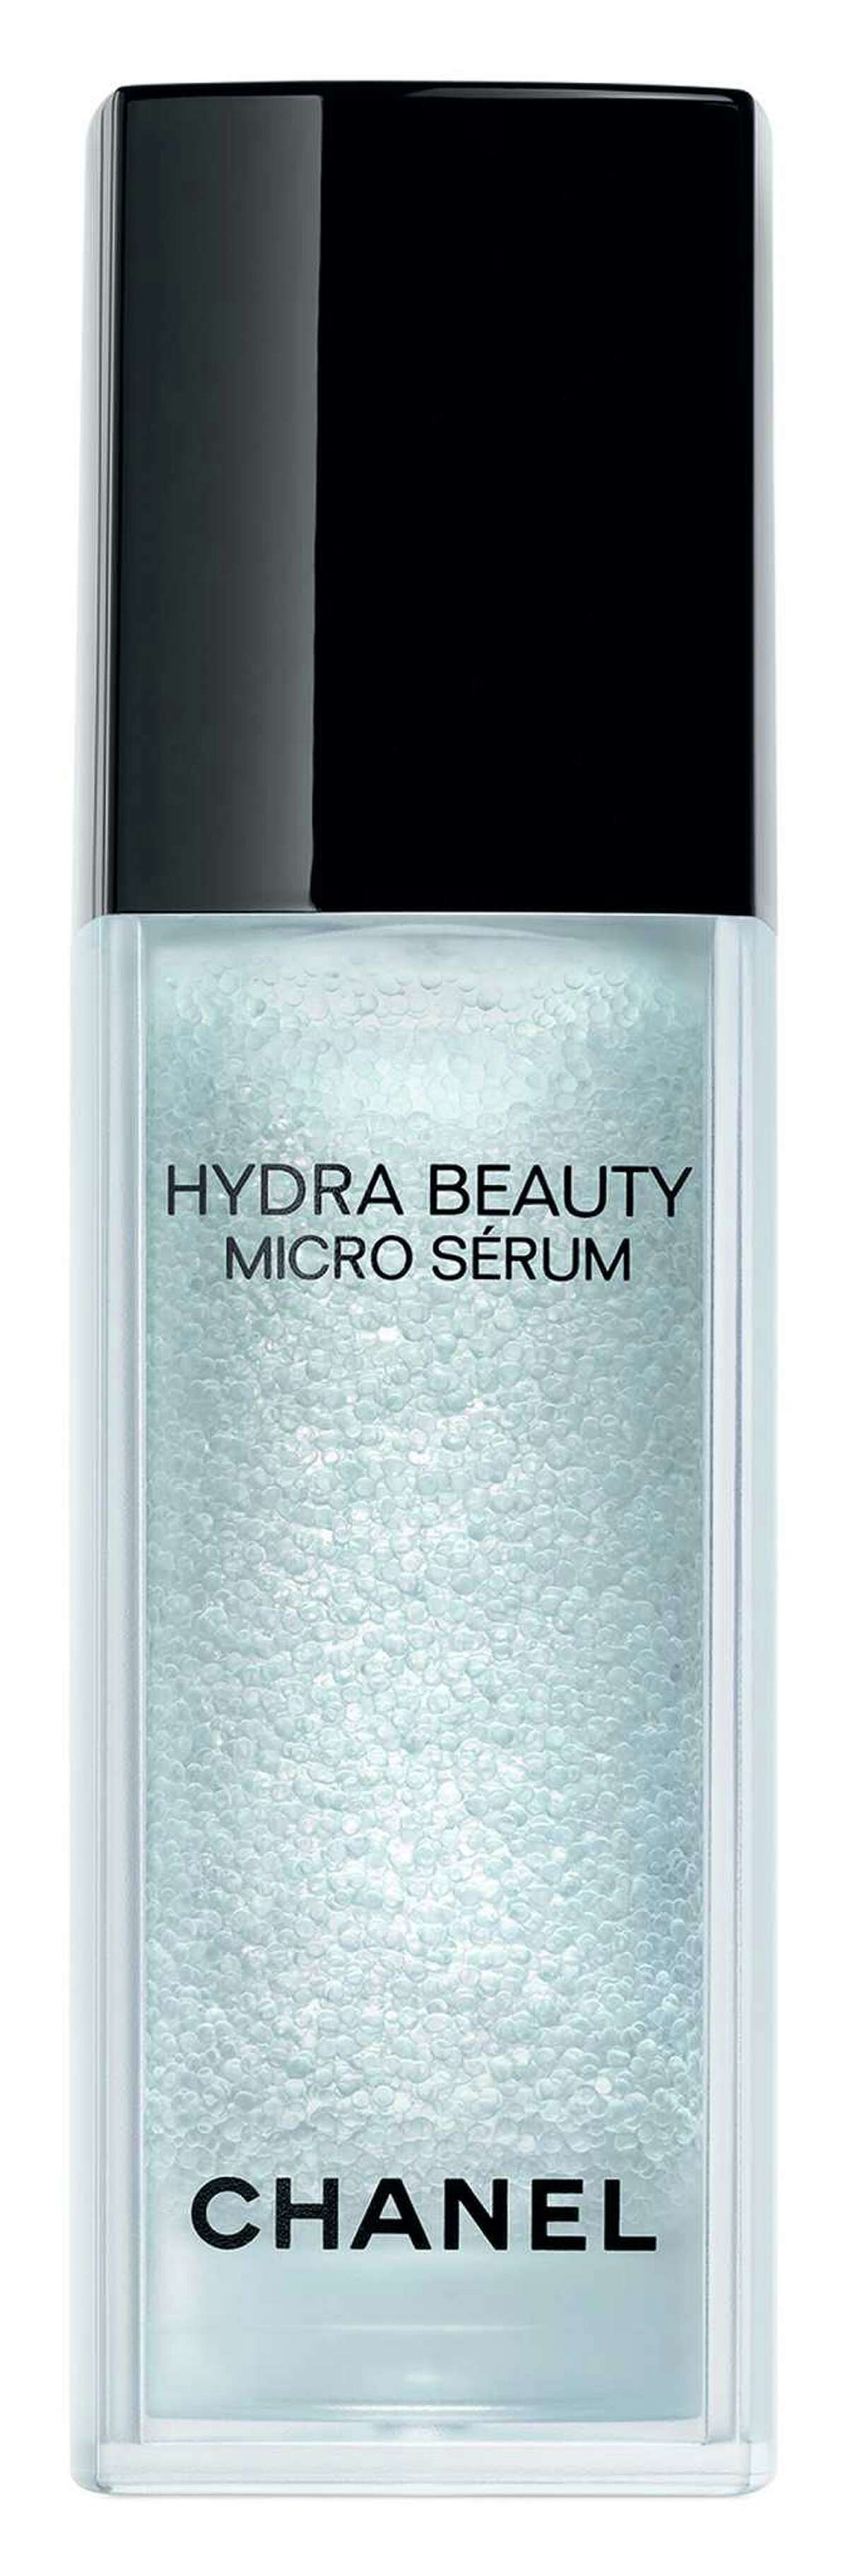 chanel micro serum hydra beauty